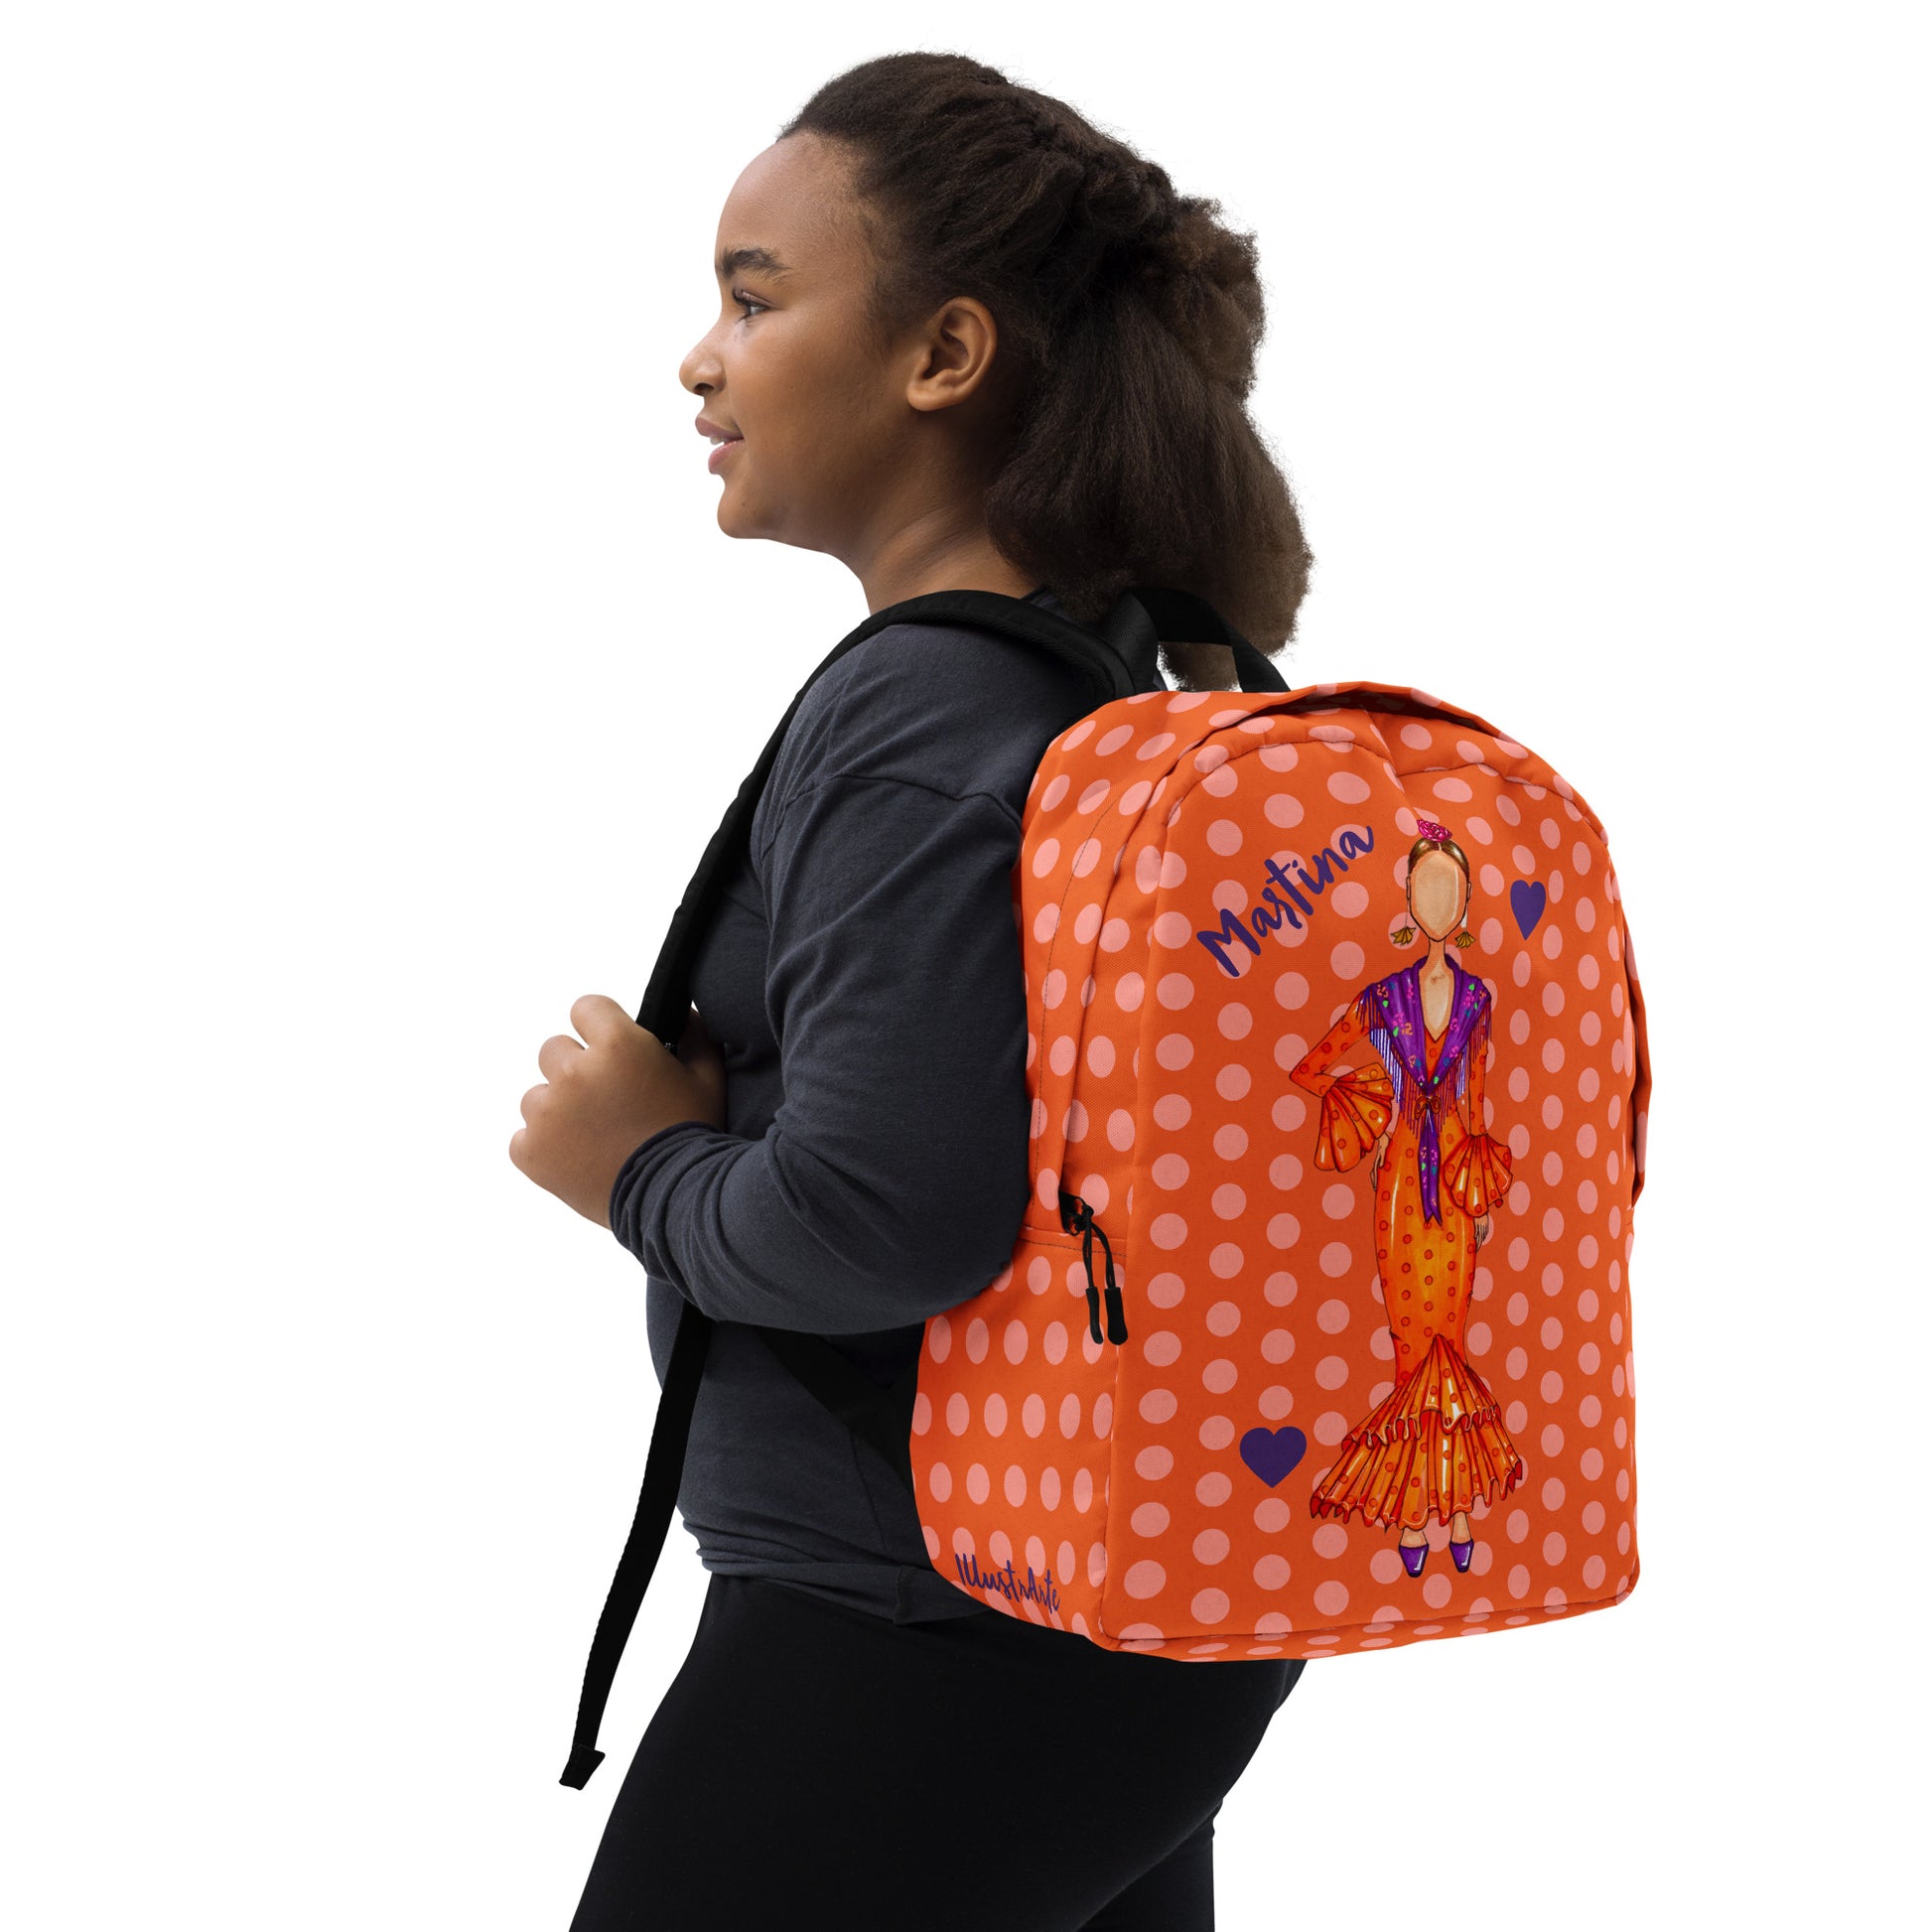 Flamenco Dancer Customizable Backpack, orange dress on a polka dot design. - IllustrArte